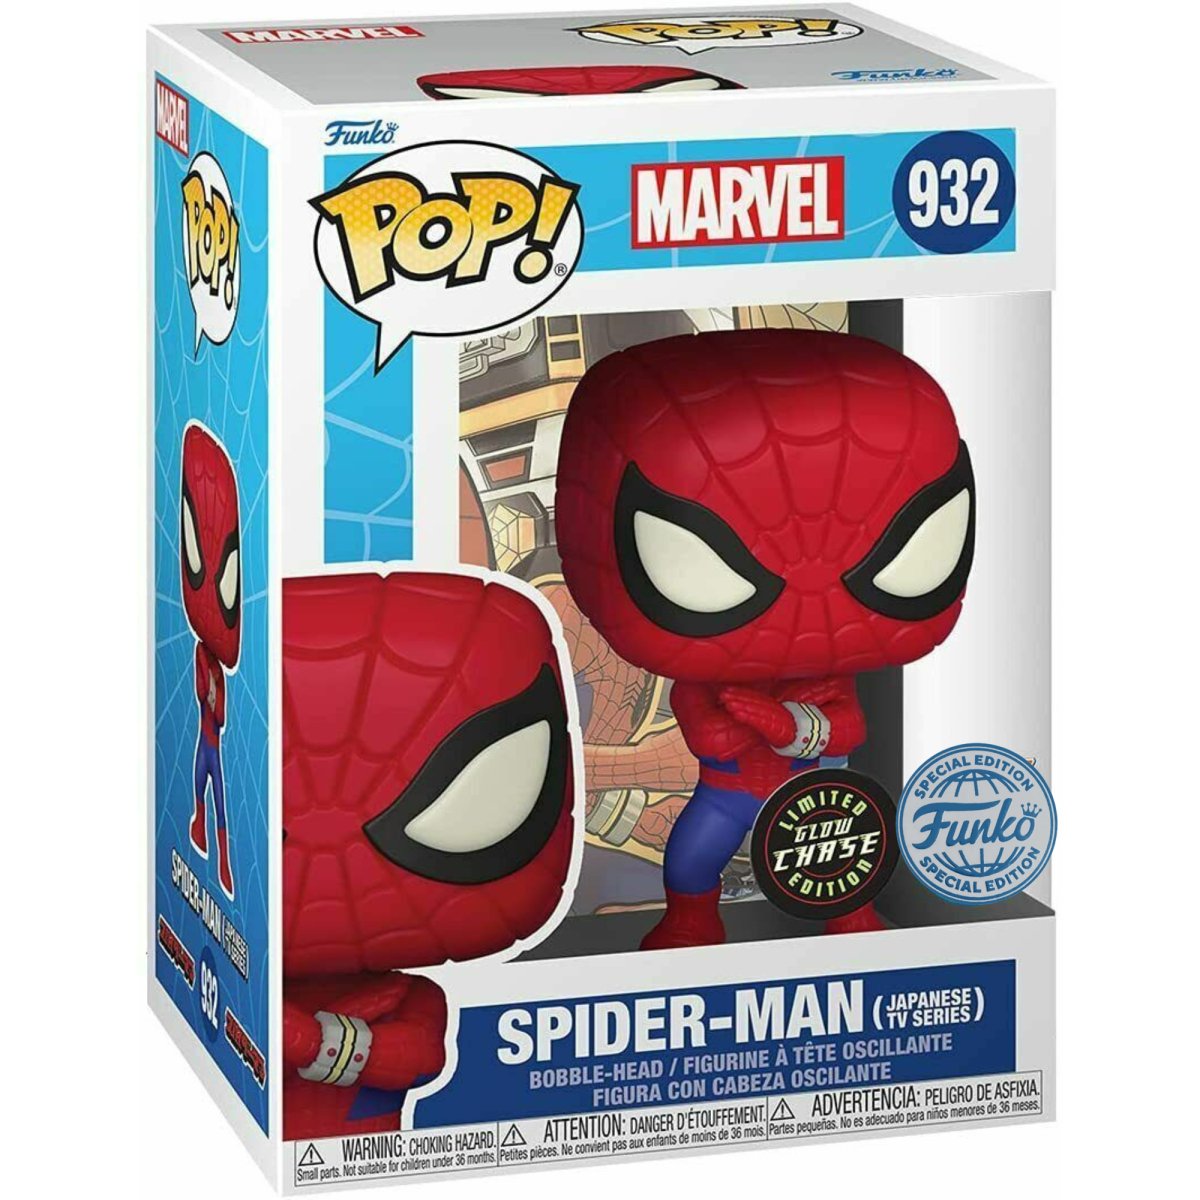 Marvel - Spider-Man (Japanese TV Series) (Chase) (Special Edition) #932 - Funko Pop! Vinyl Marvel - Persona Toys